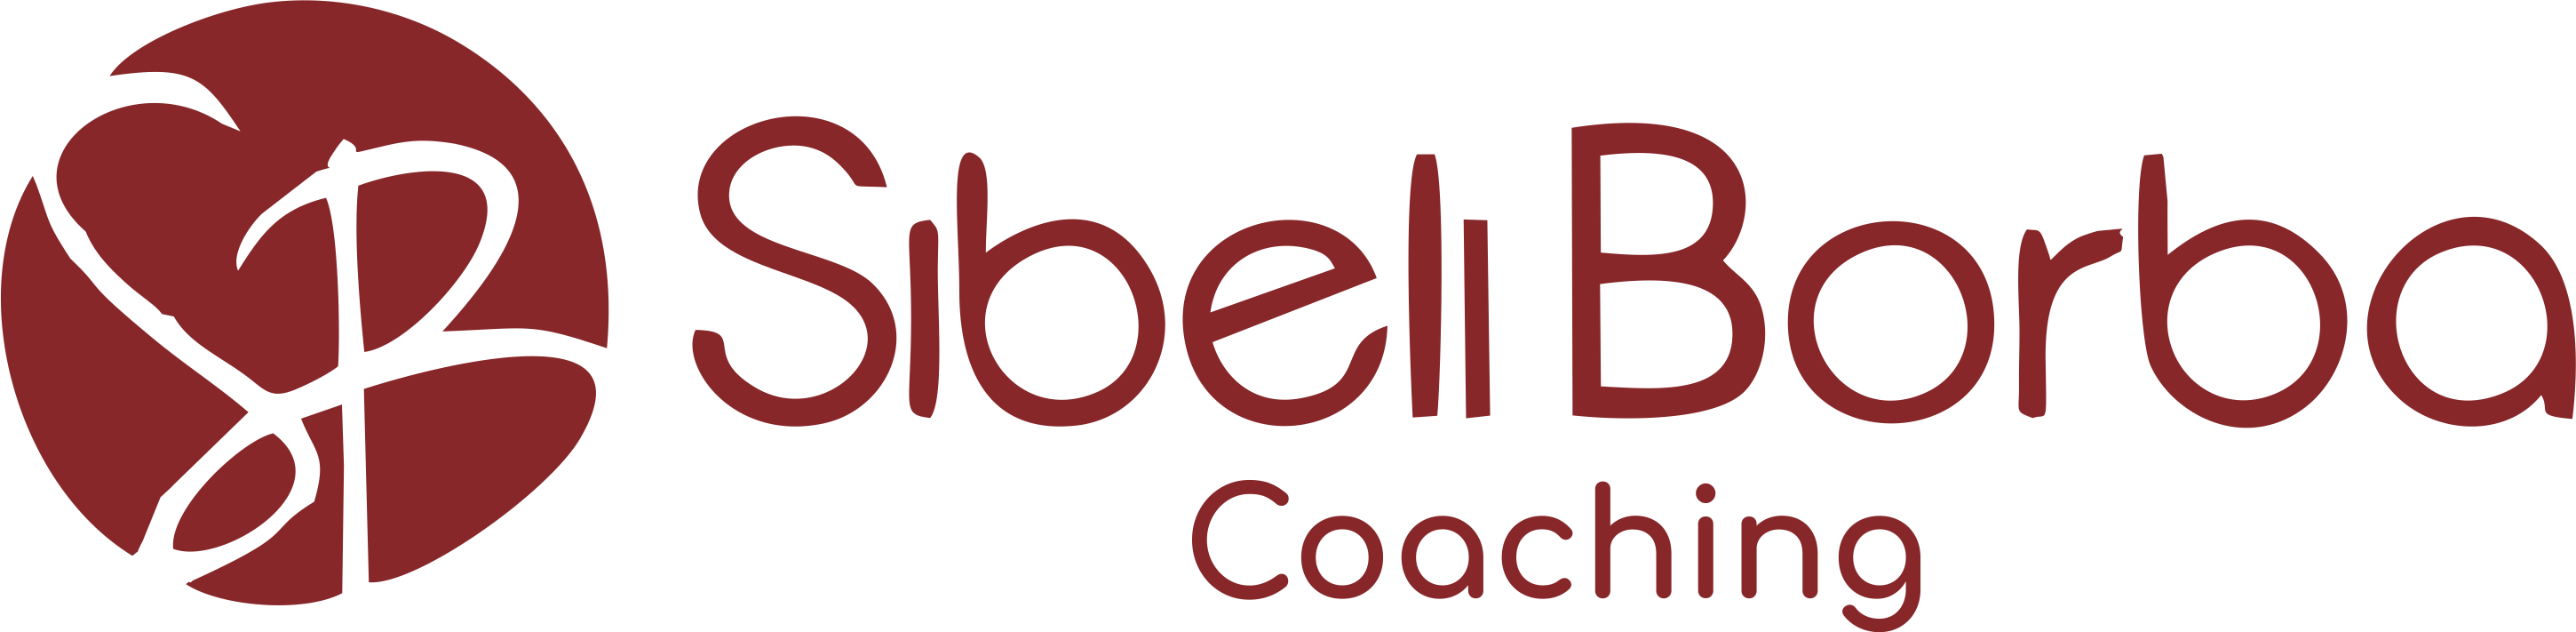 Sibeli Borba Coaching